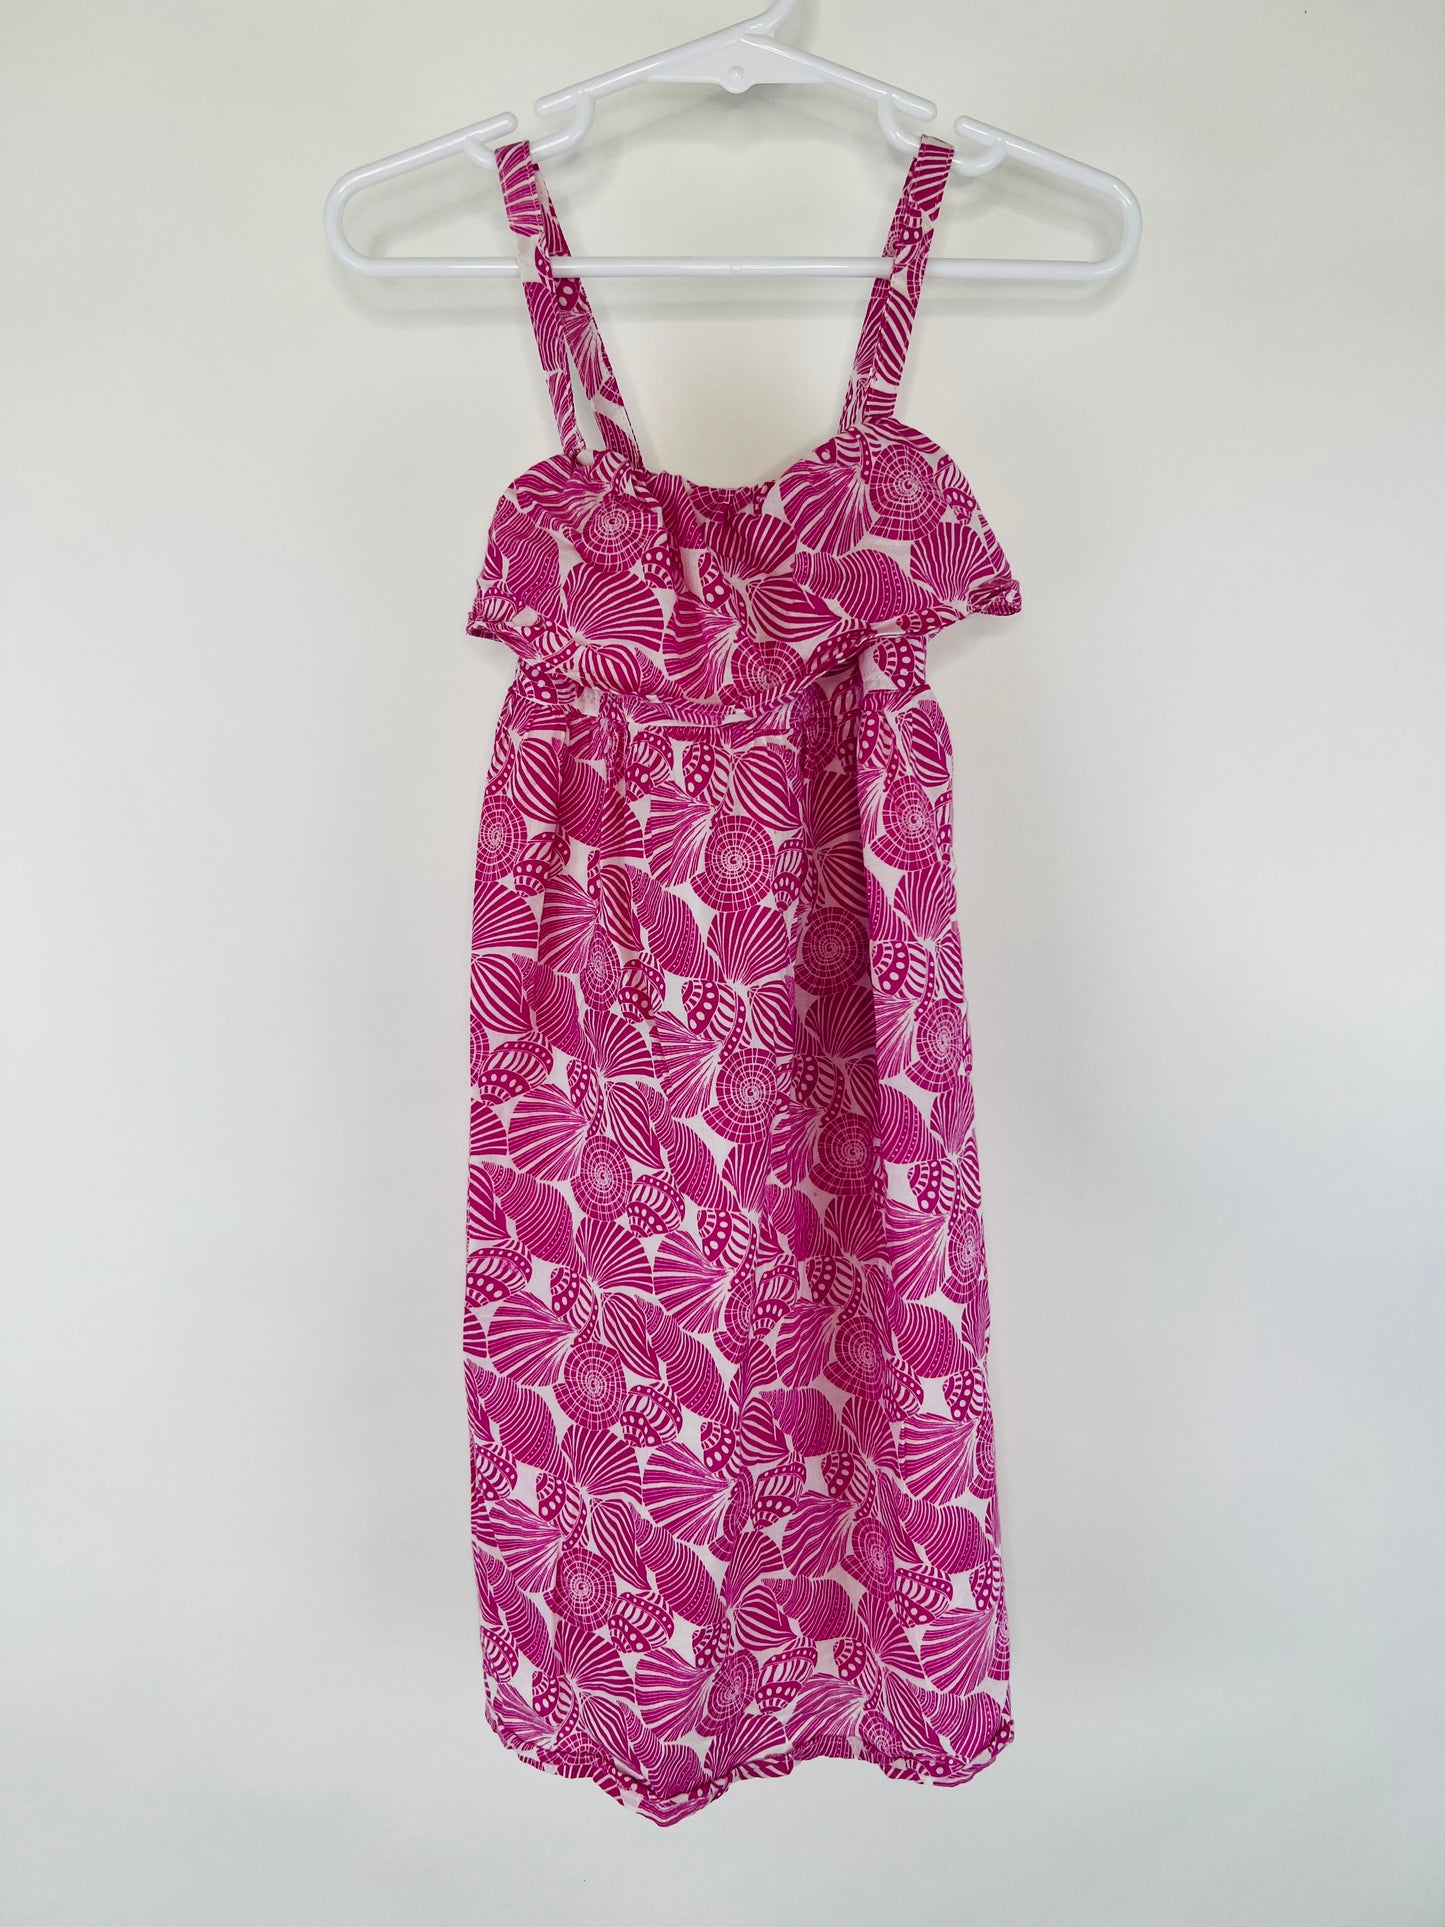 Lands End Ruffle Detail Seashell Print Dress - 4T